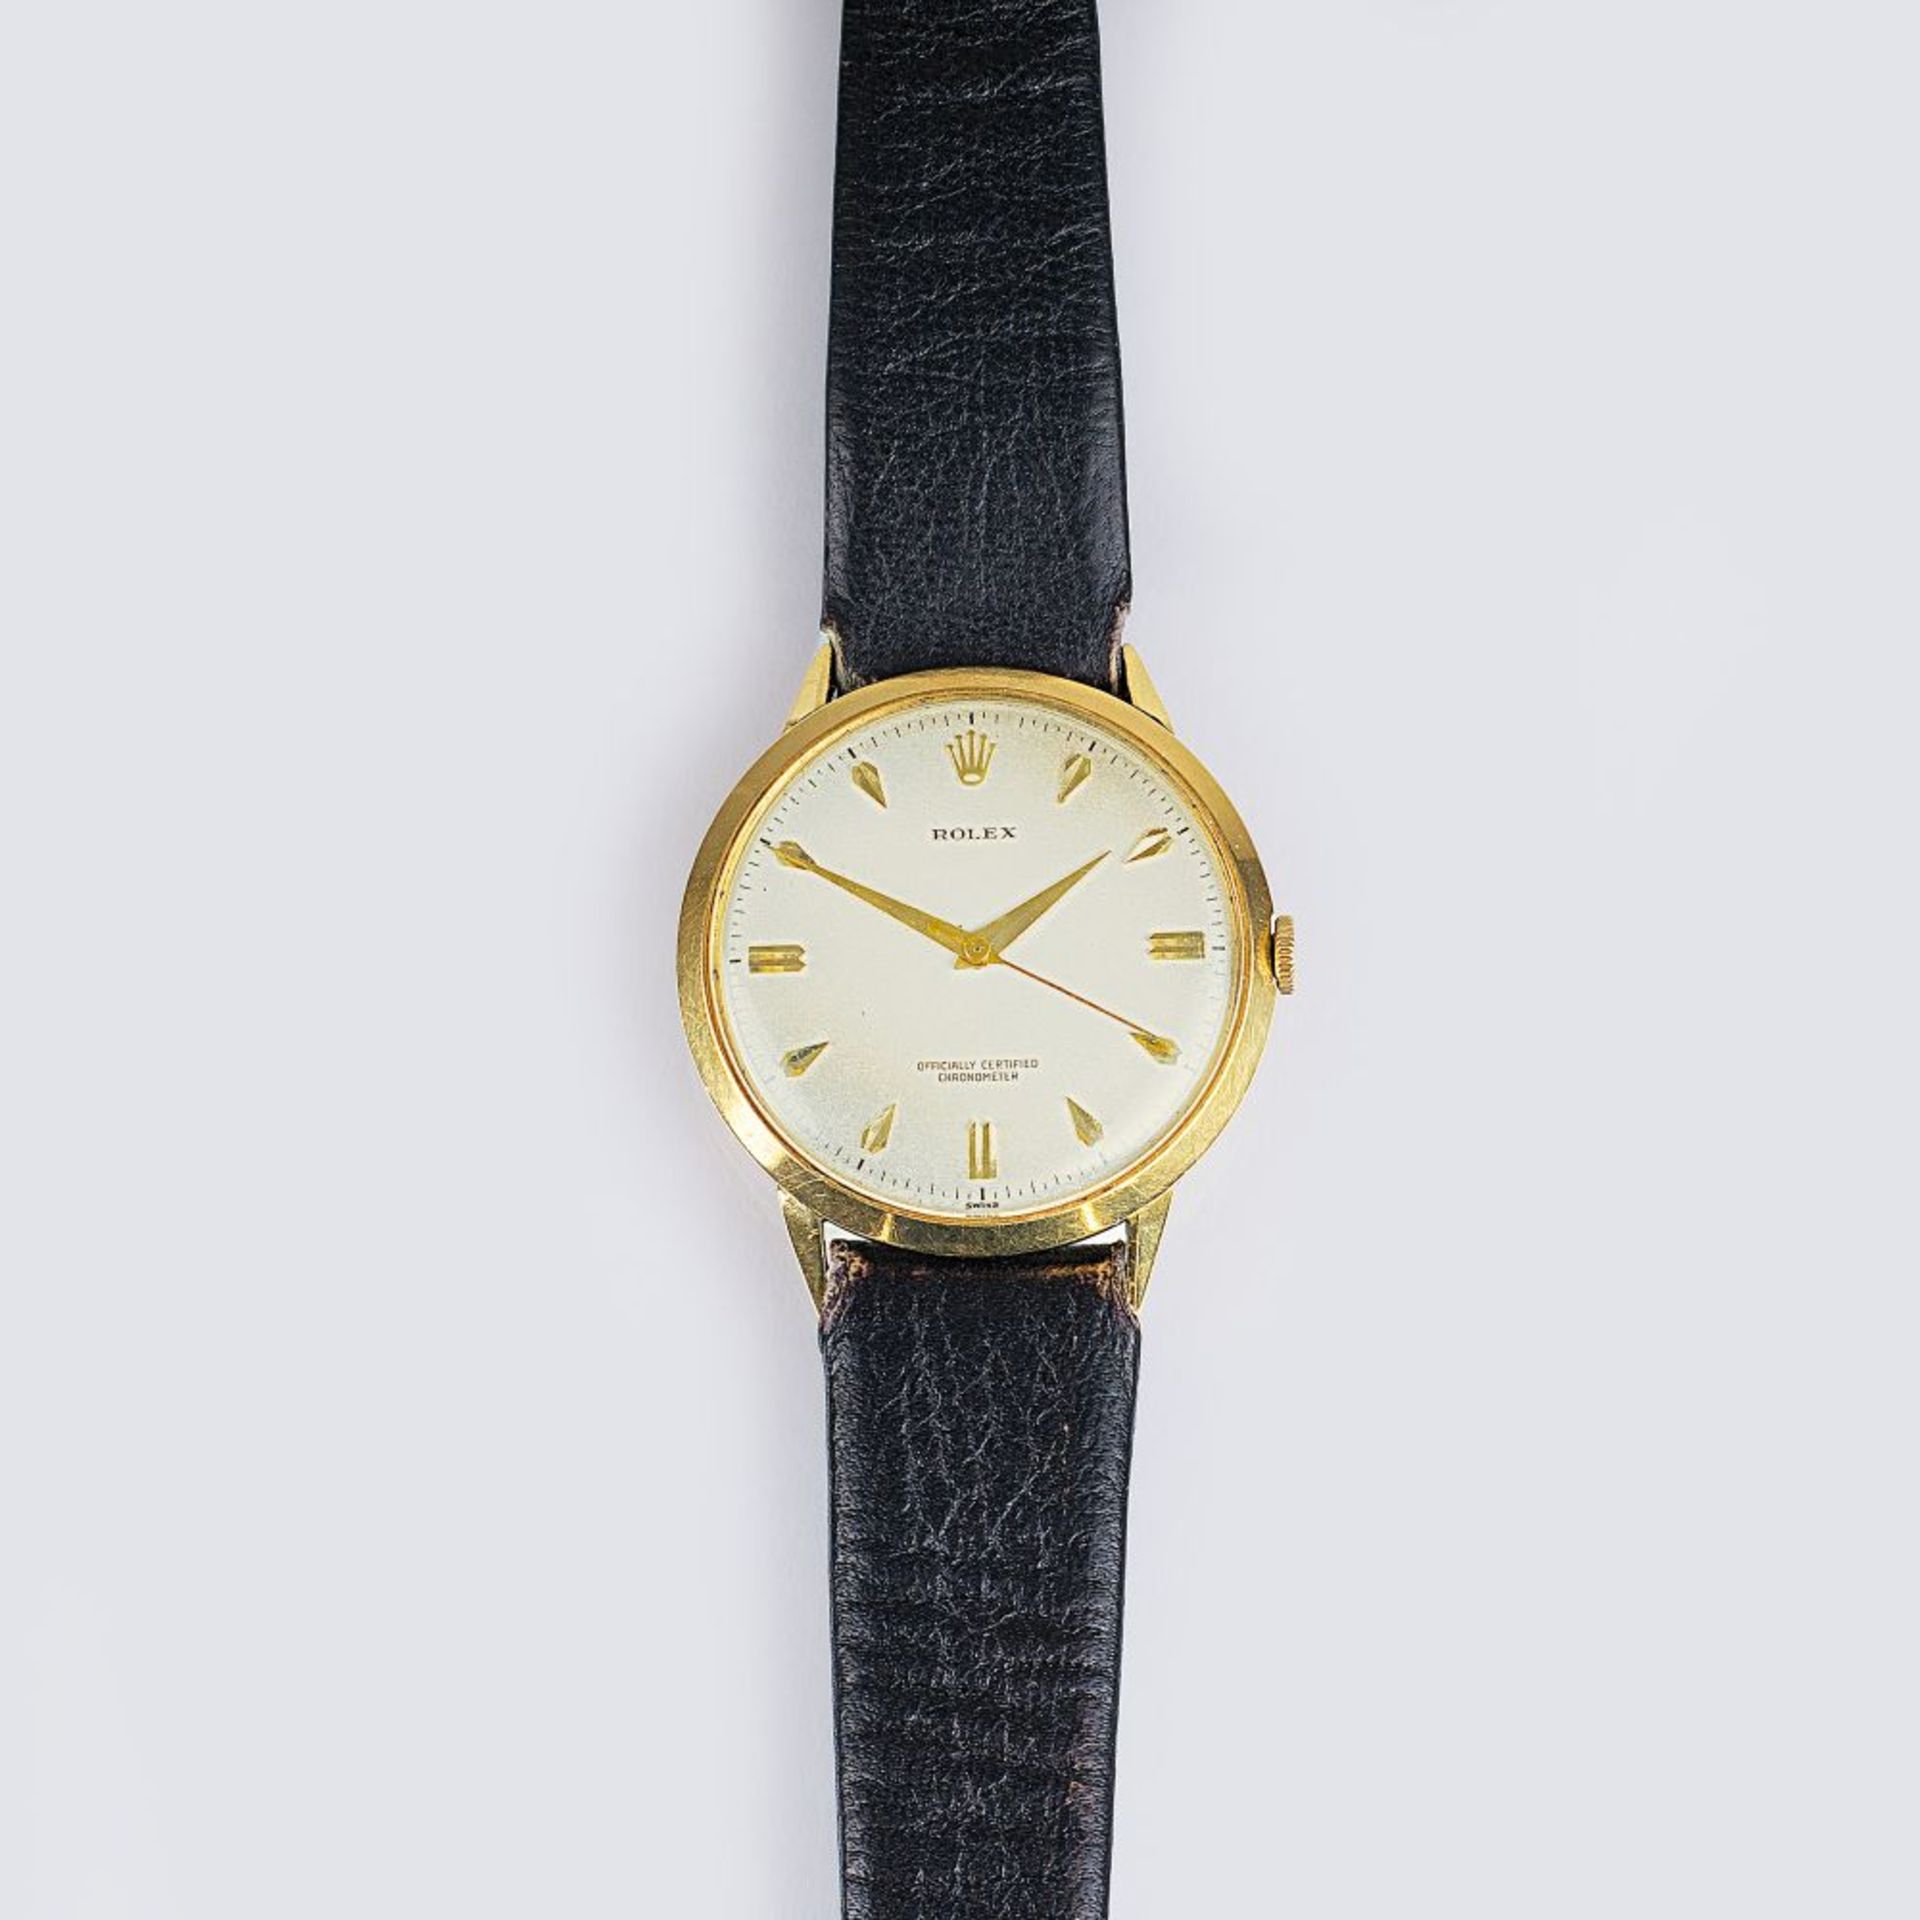 Rolex reg. 1908. Vintage Herren-Armbanduhr Chronometer.